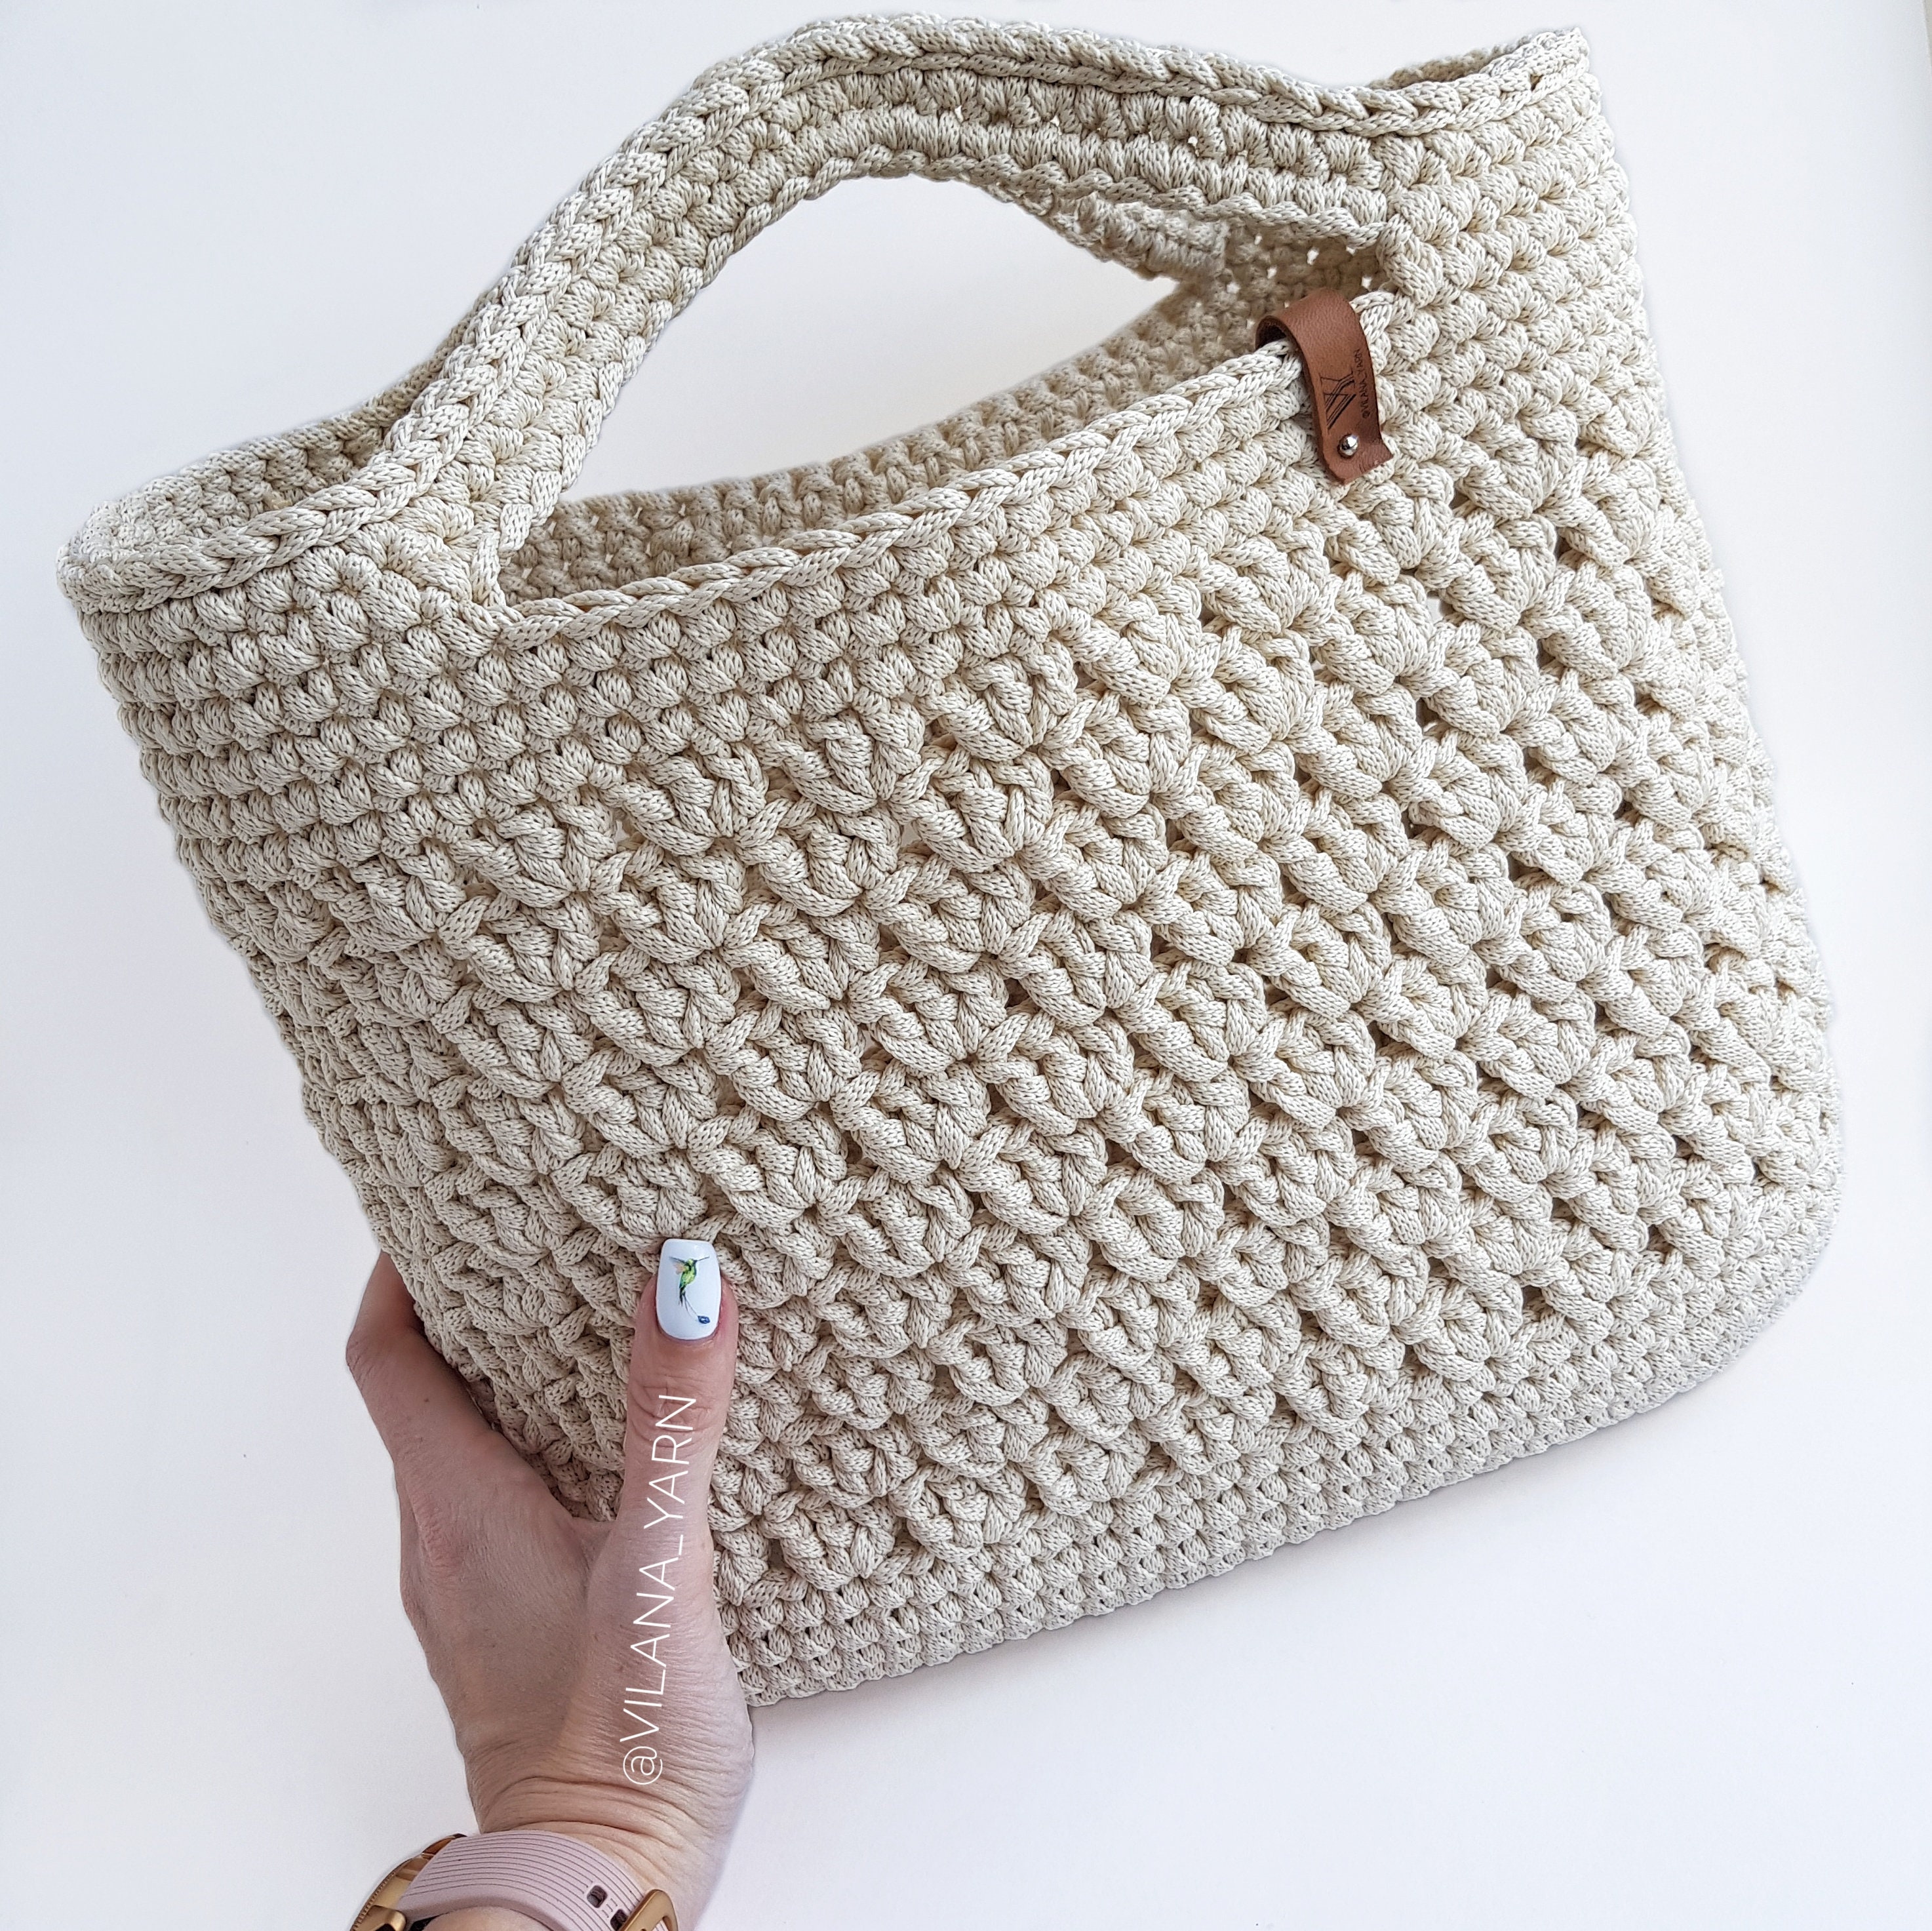 Summer boho bag pattern PDF / crochet tote pdf | Etsy